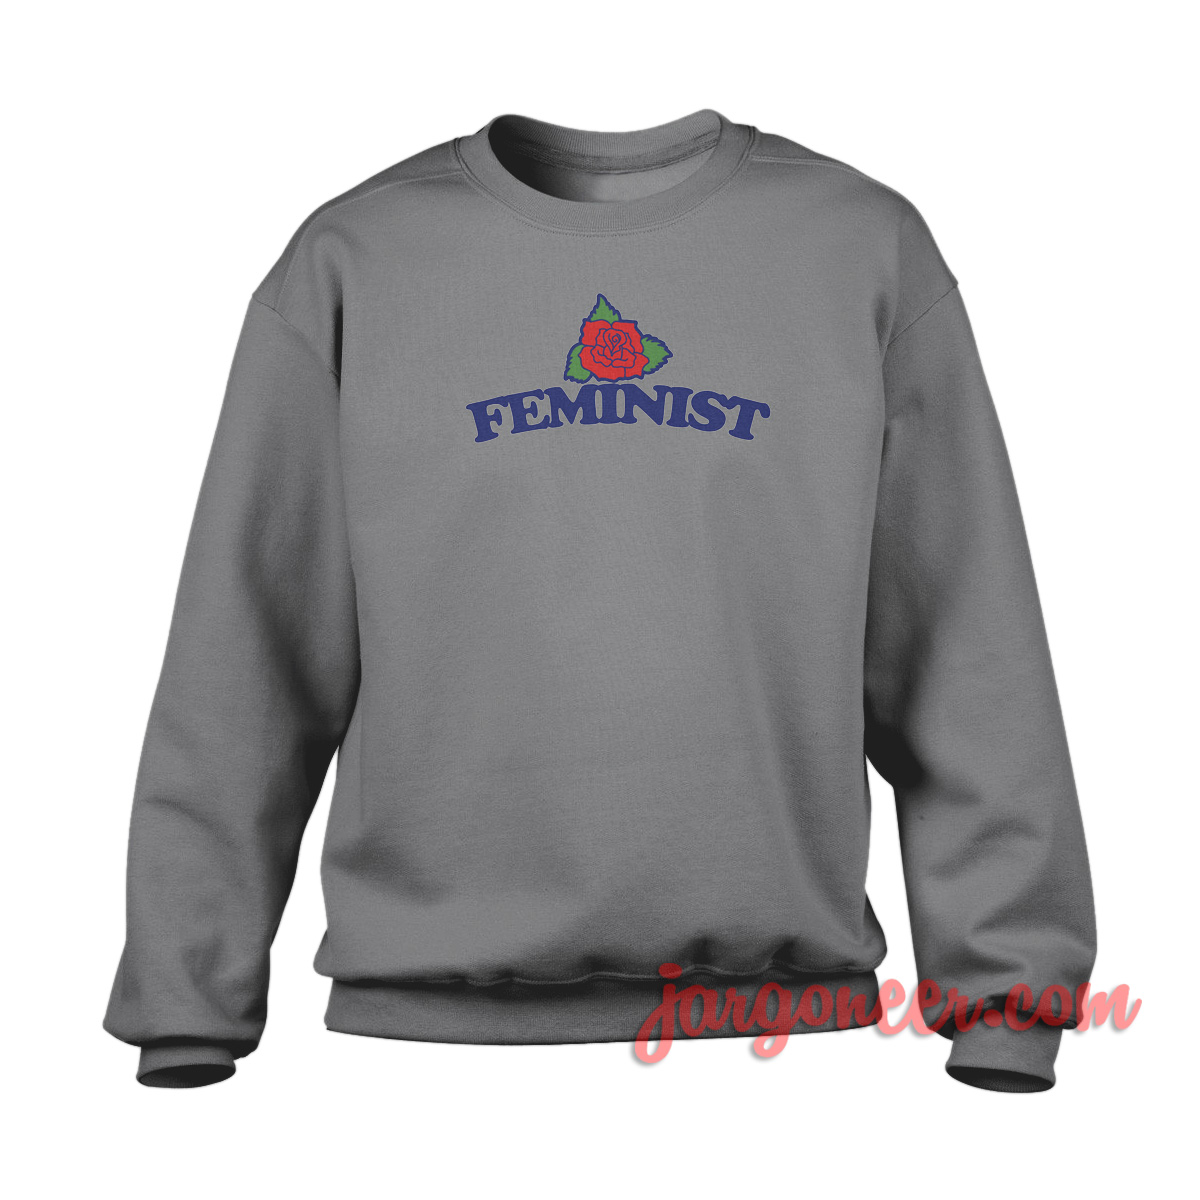 Feminist Roses - Shop Unique Graphic Cool Shirt Designs